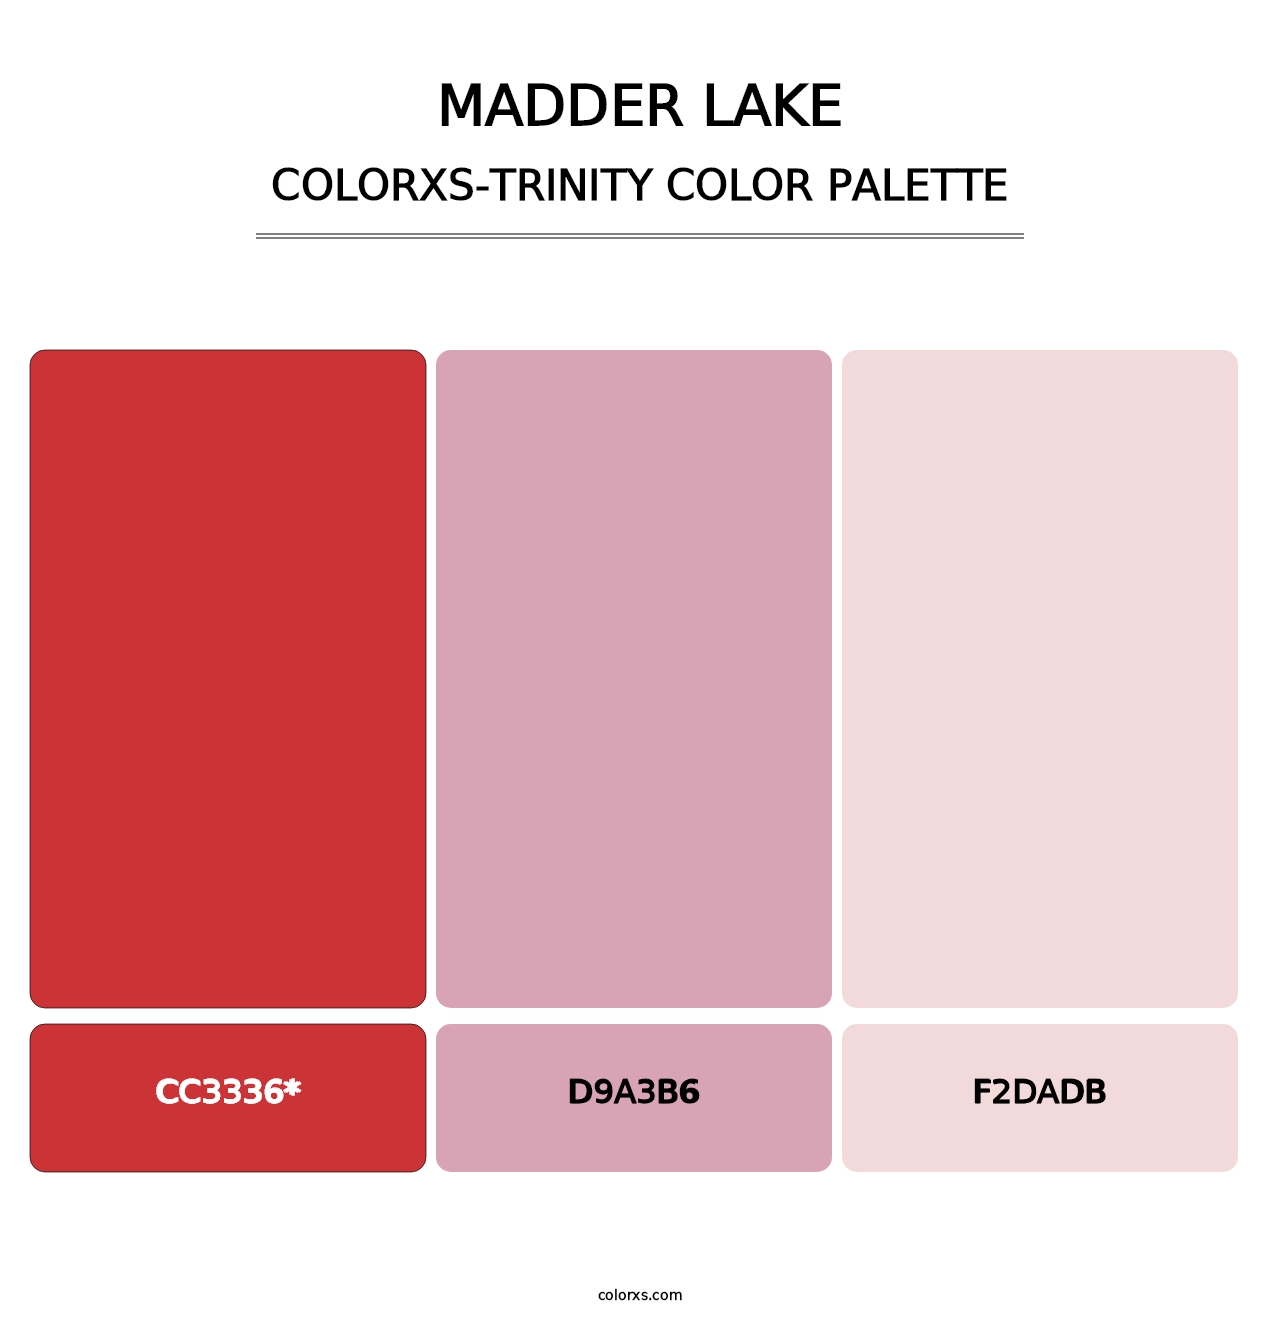 Madder Lake - Colorxs Trinity Palette